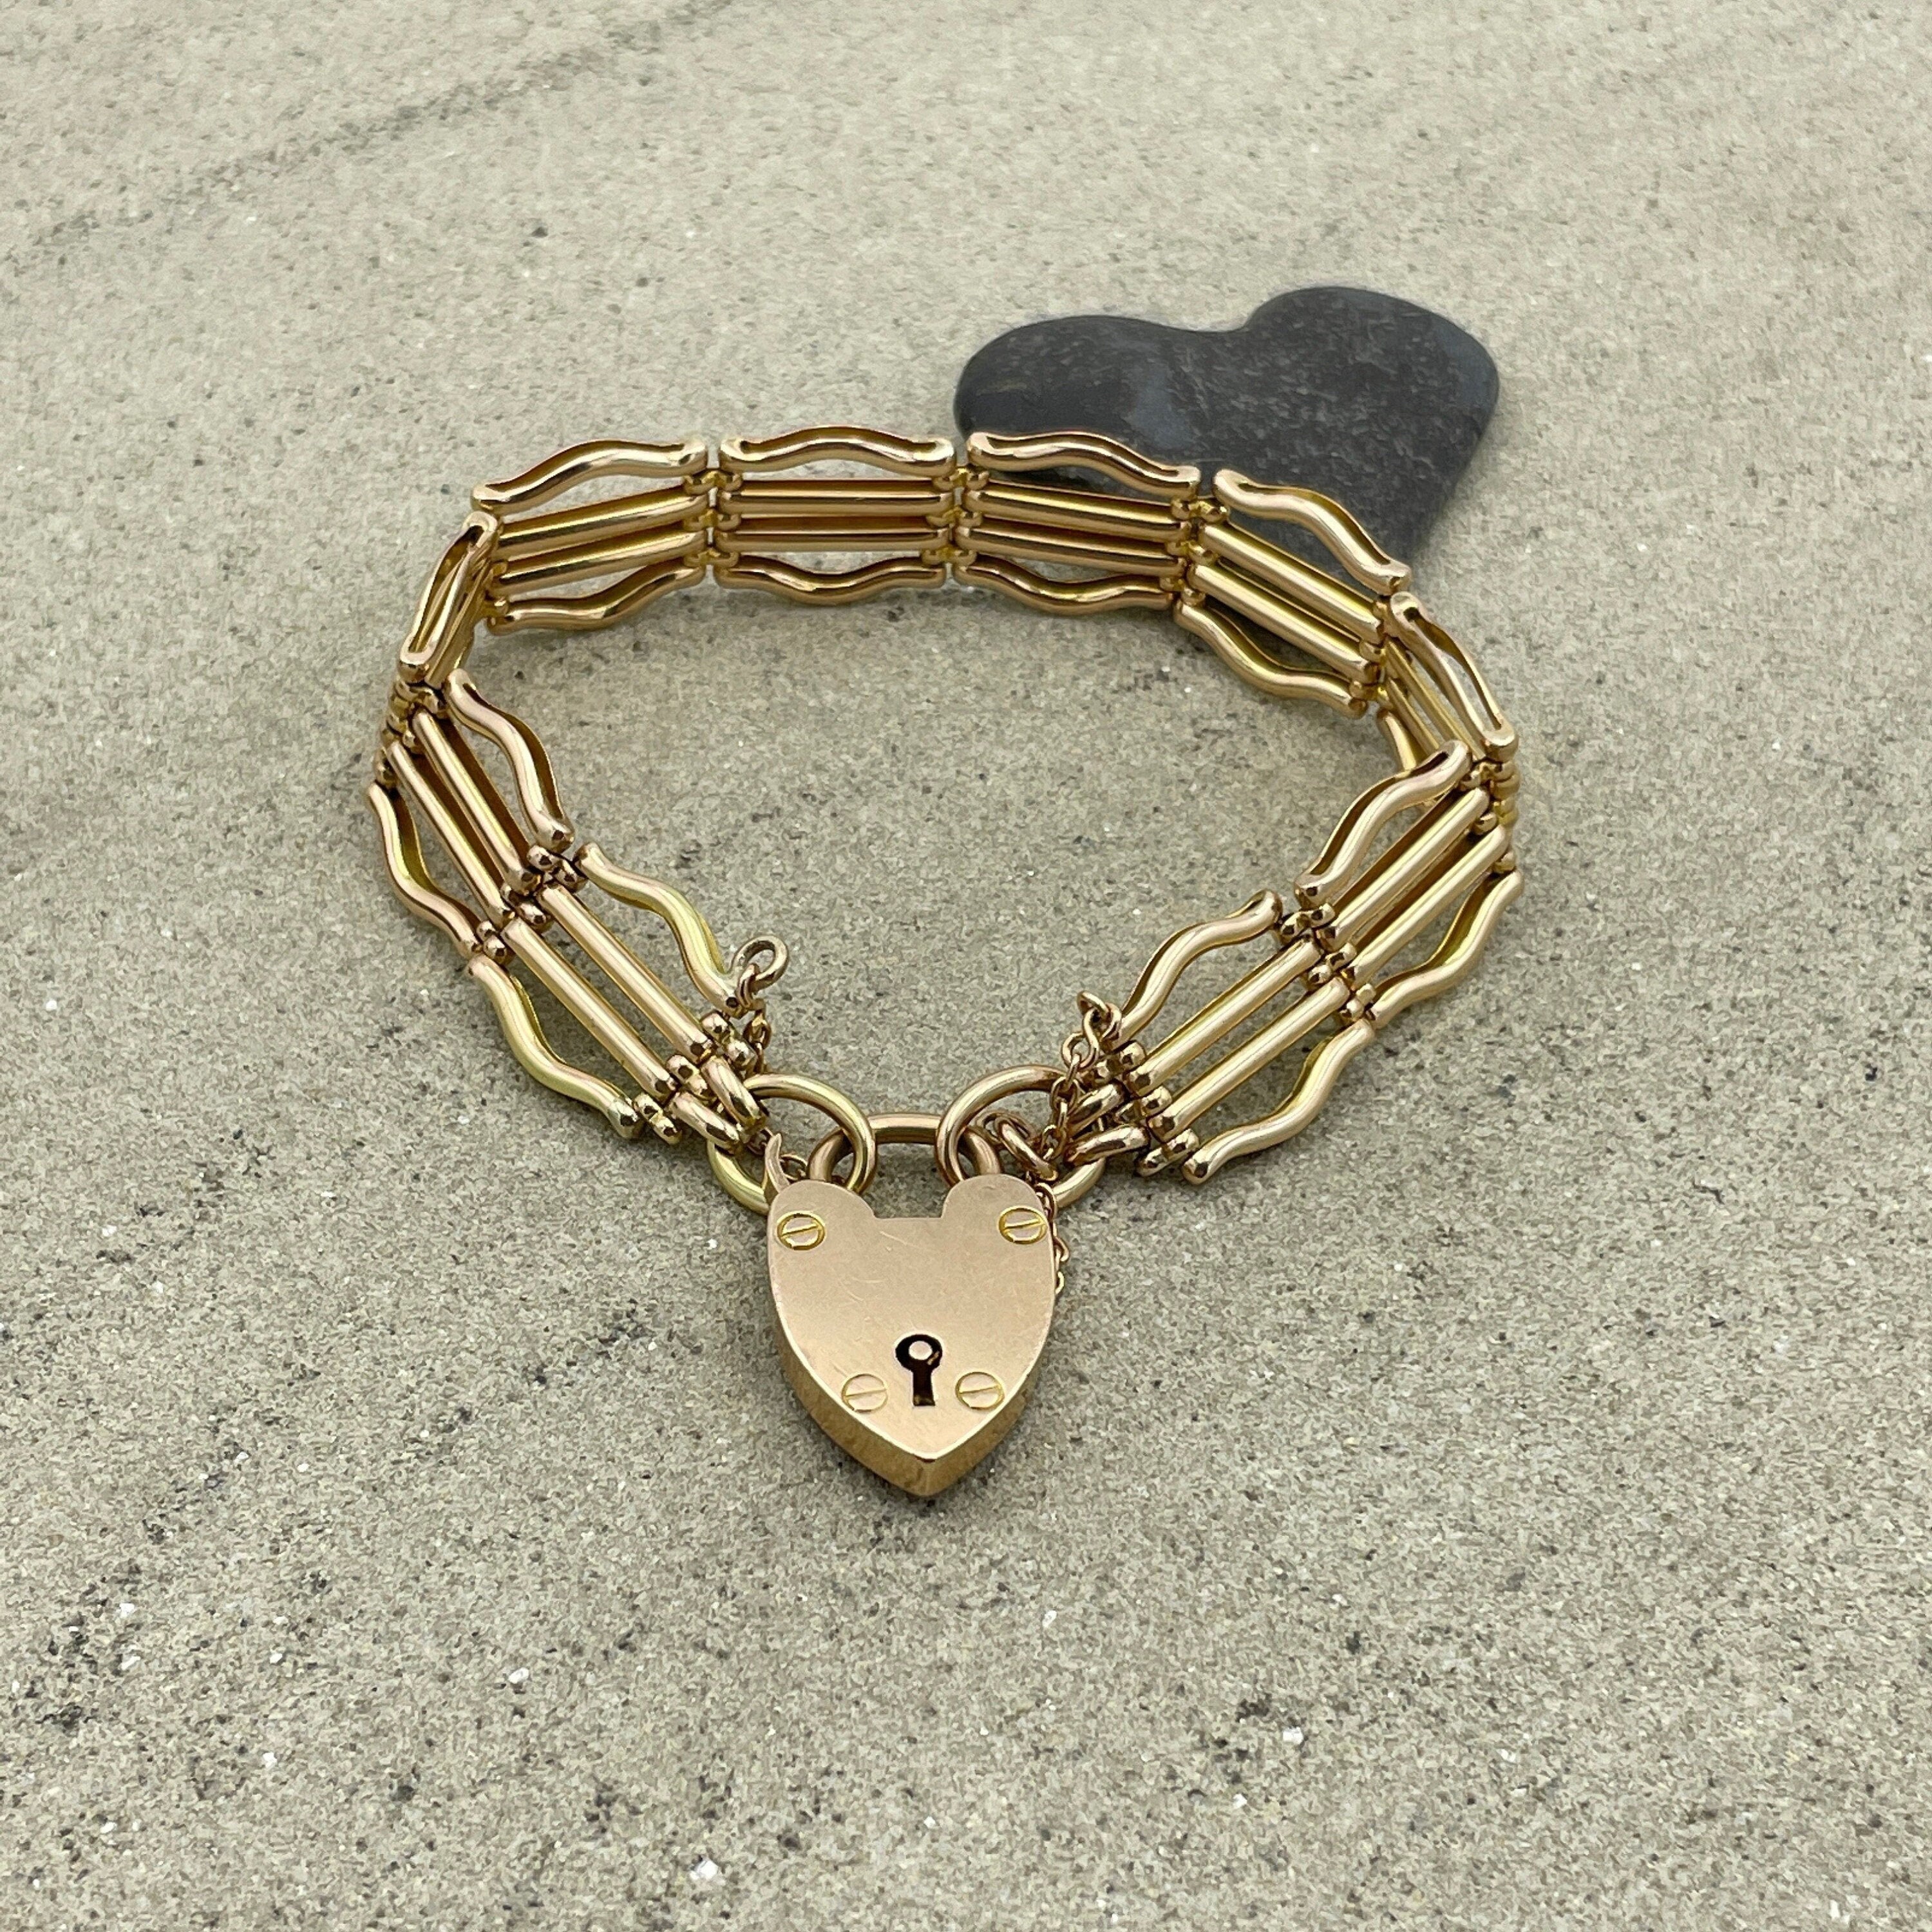 Antique 15ct Gold, Fancy Gate Link Bracelet With Heart Padlock Clasp